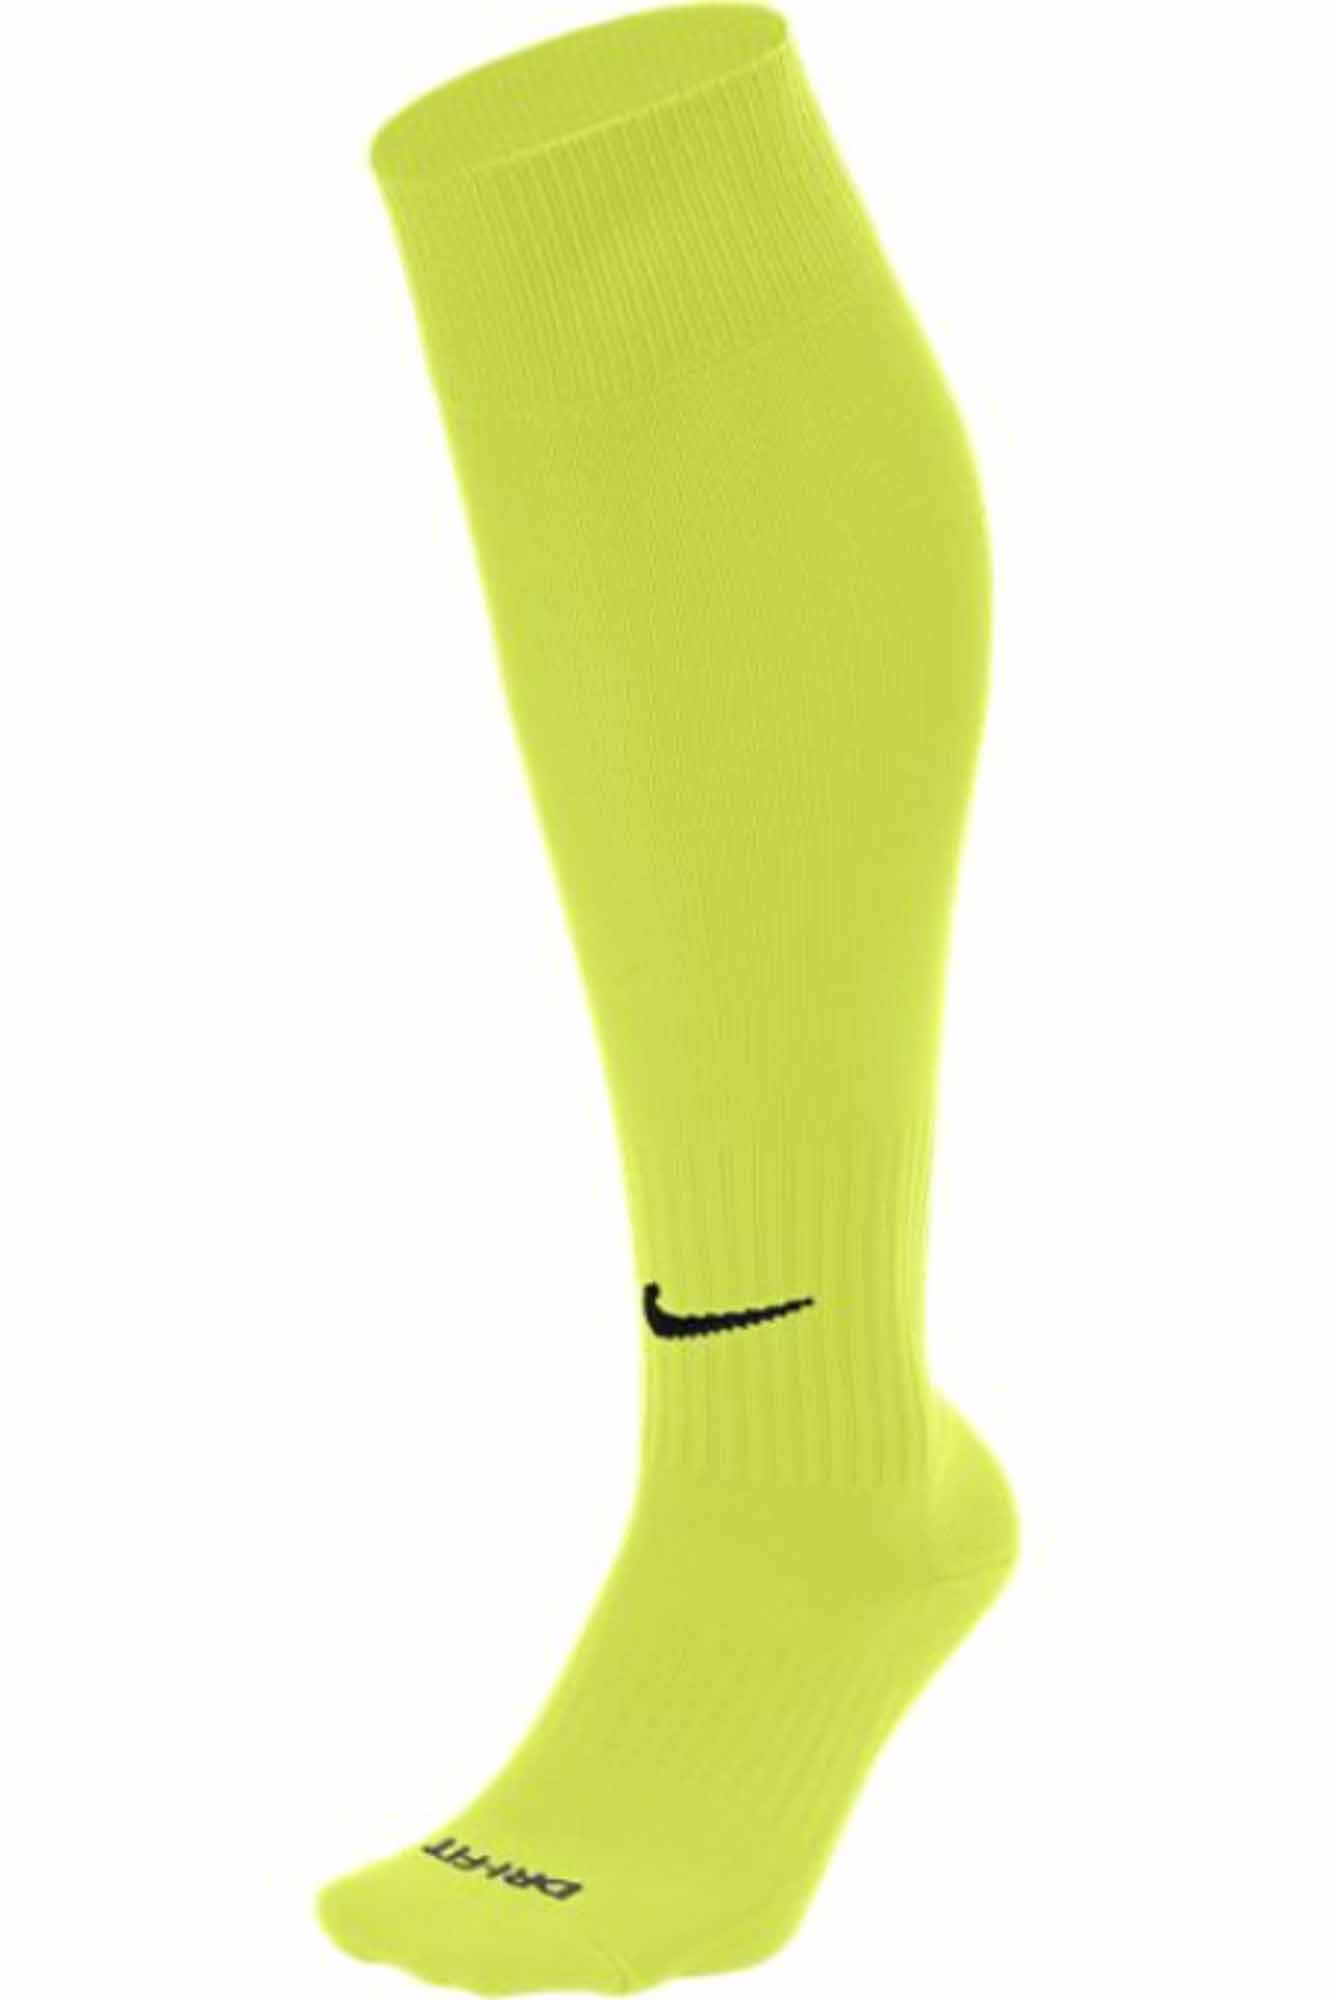 Nike Classic Soccer Socks Size Chart